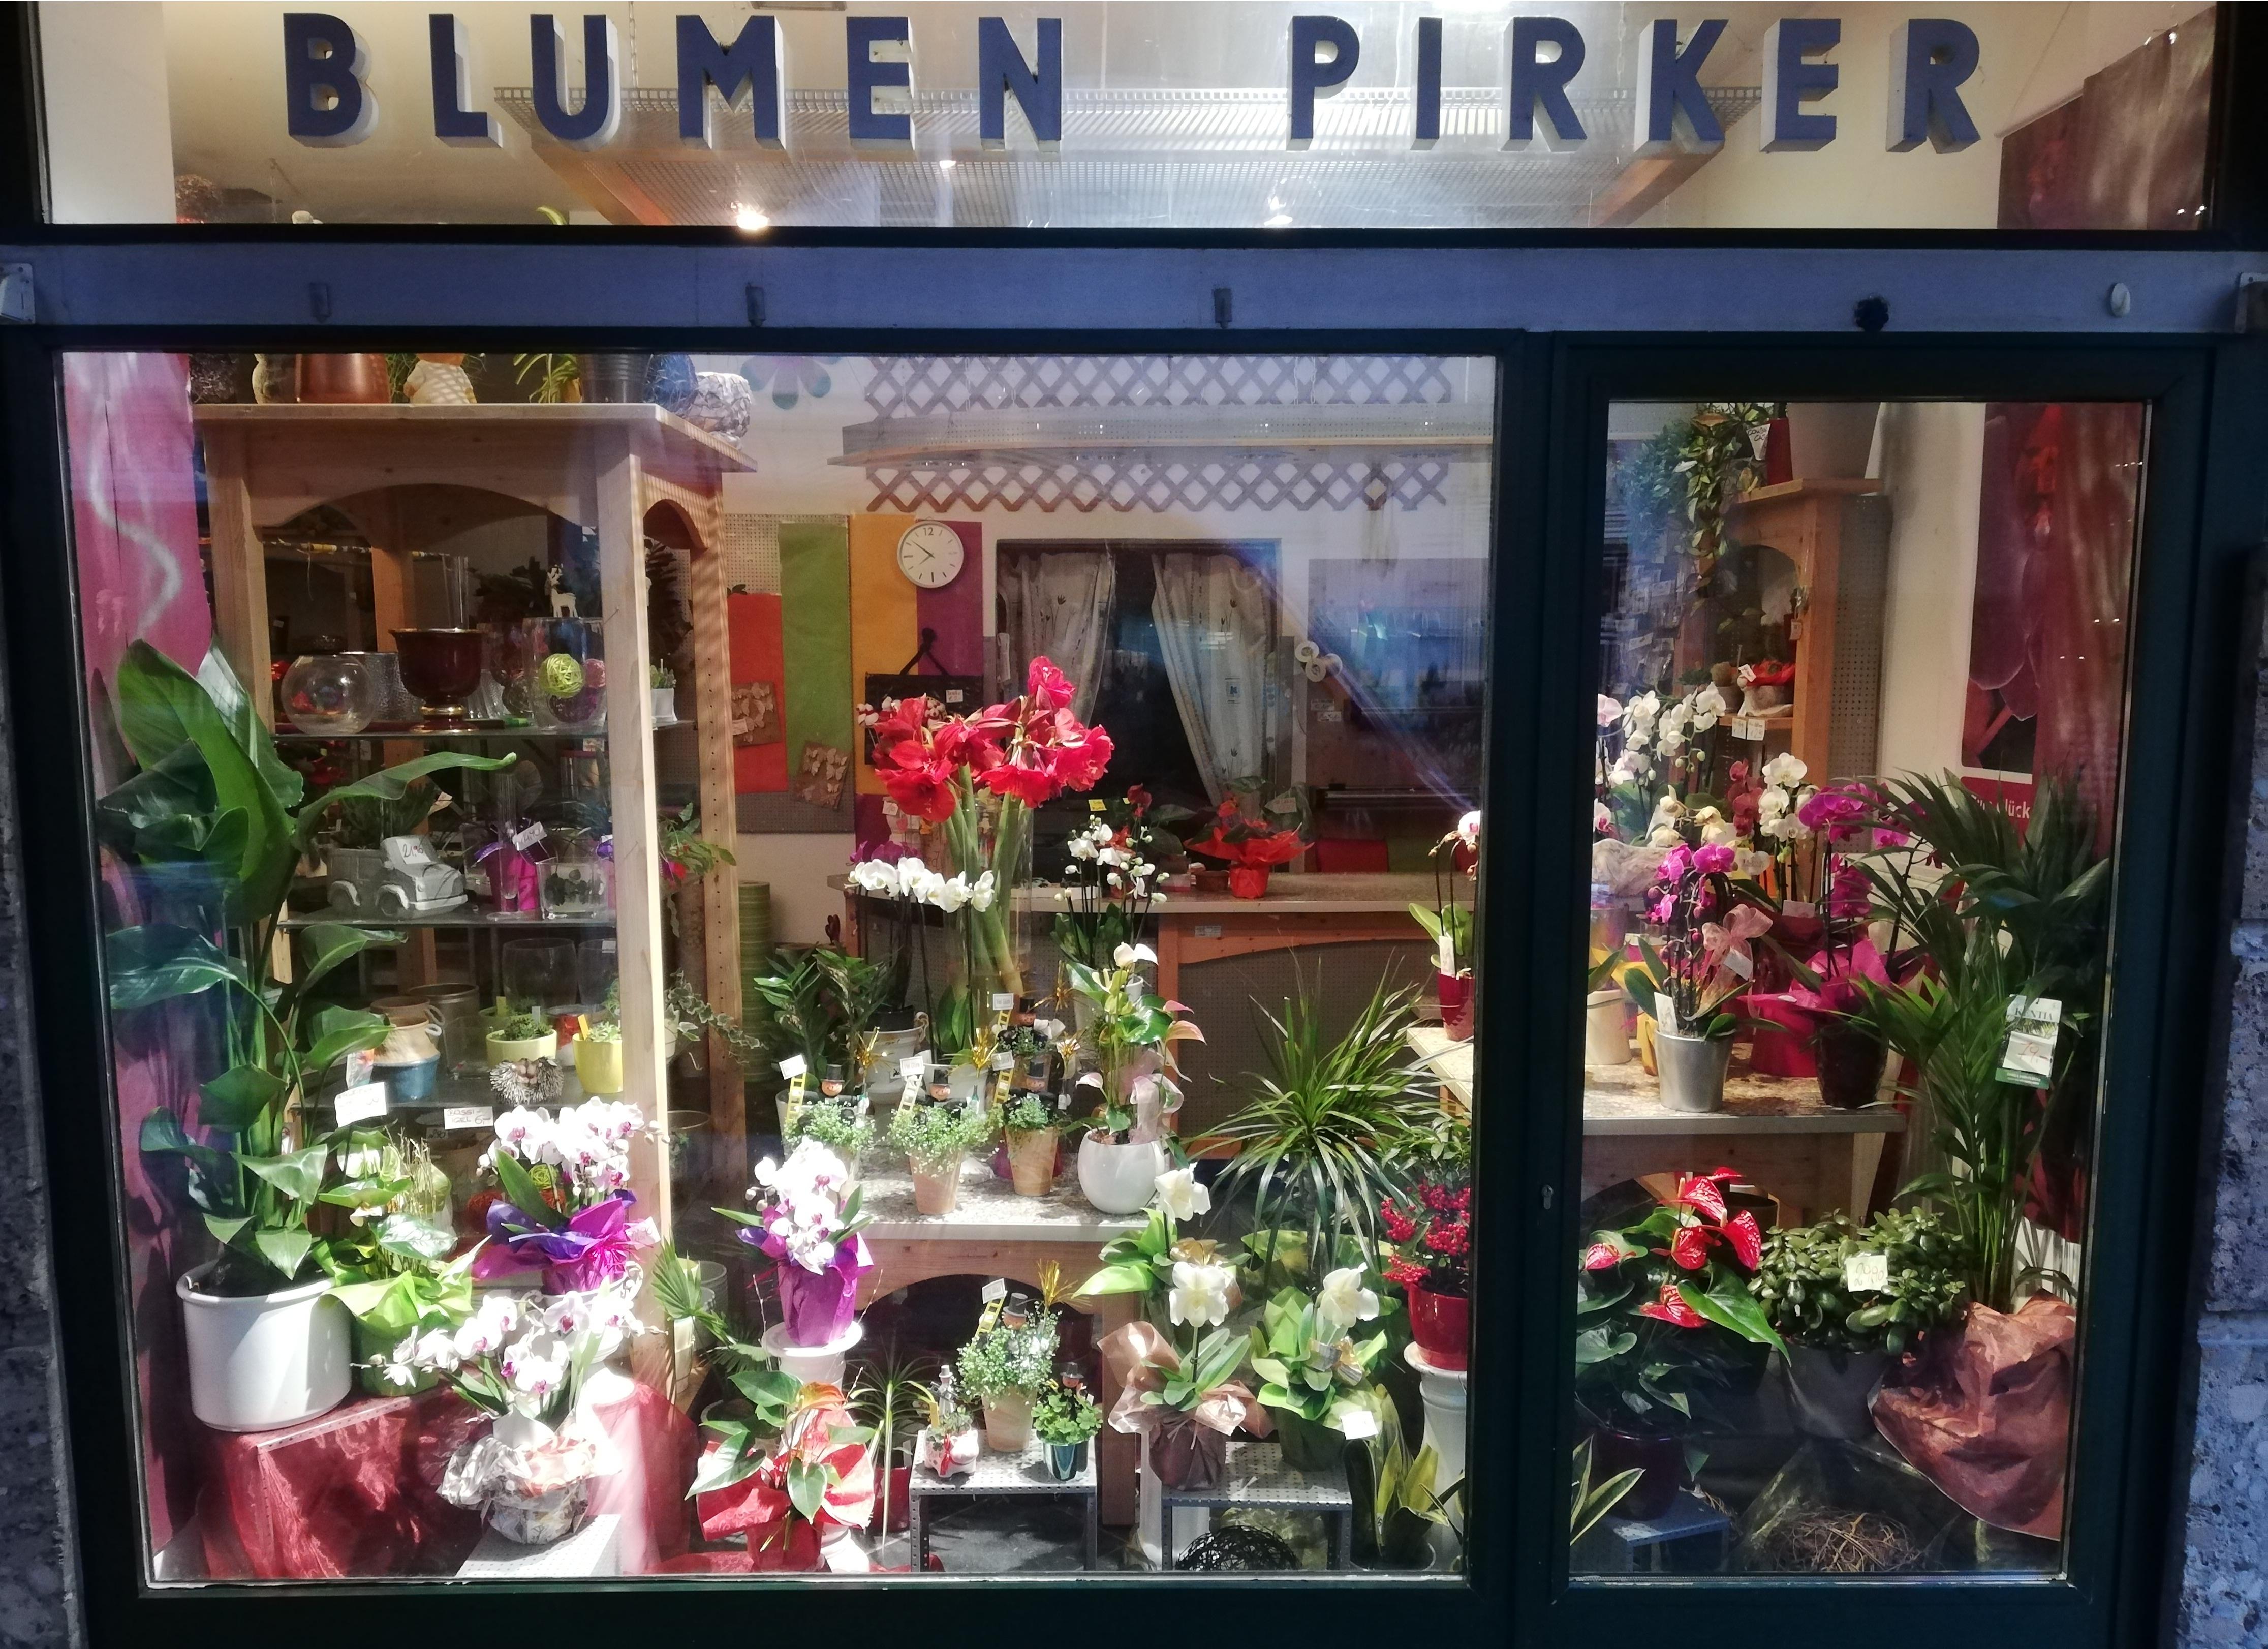 Blumen Pirker, Kirchengasse 2 in Krems an der Donau